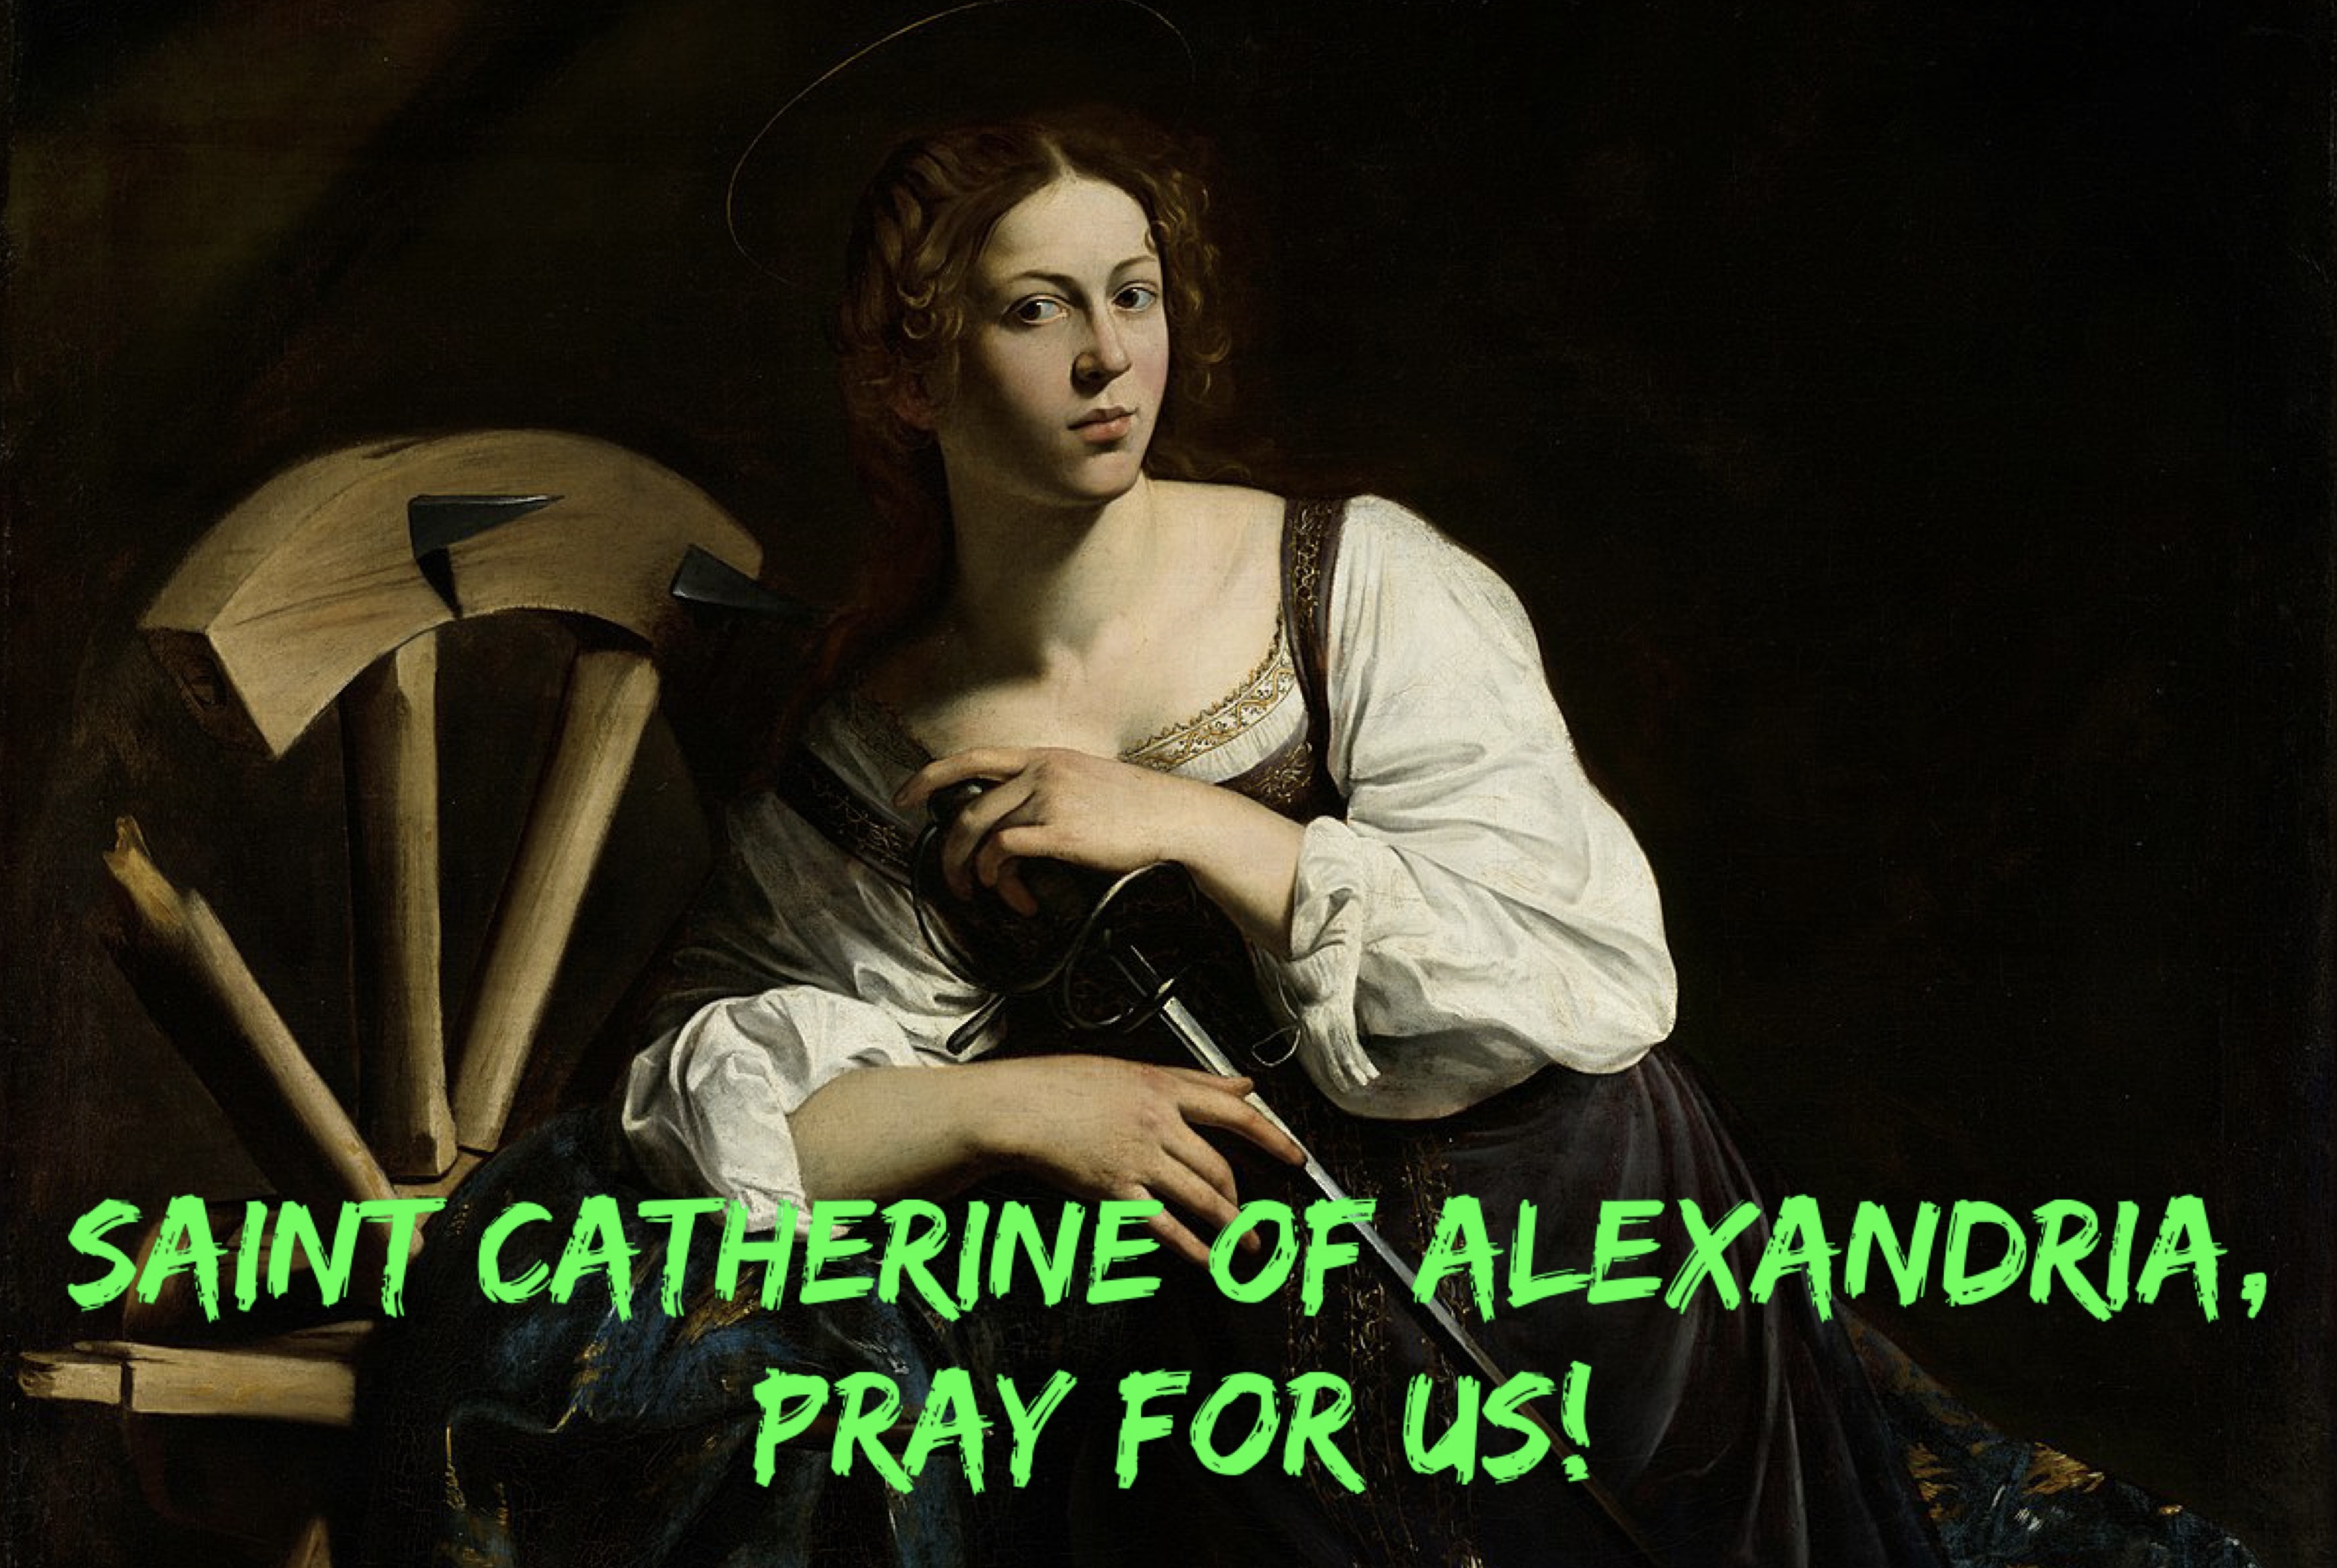 25th November – Saint Catherine of Alexandria